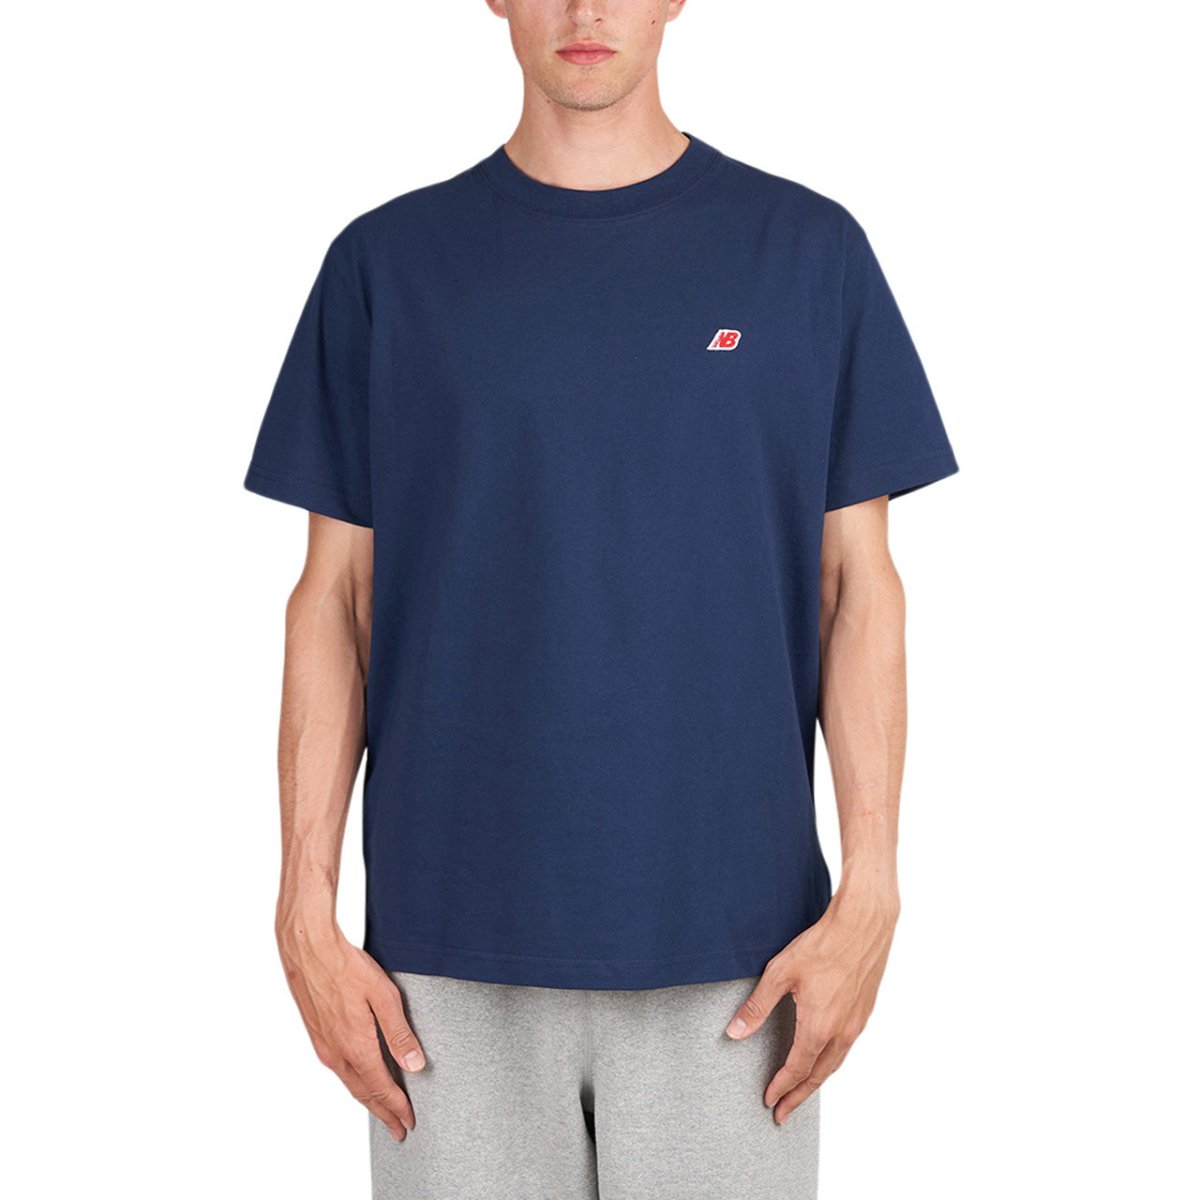 Image of New Balance Made in USA Core T-Shirt (Indigo)